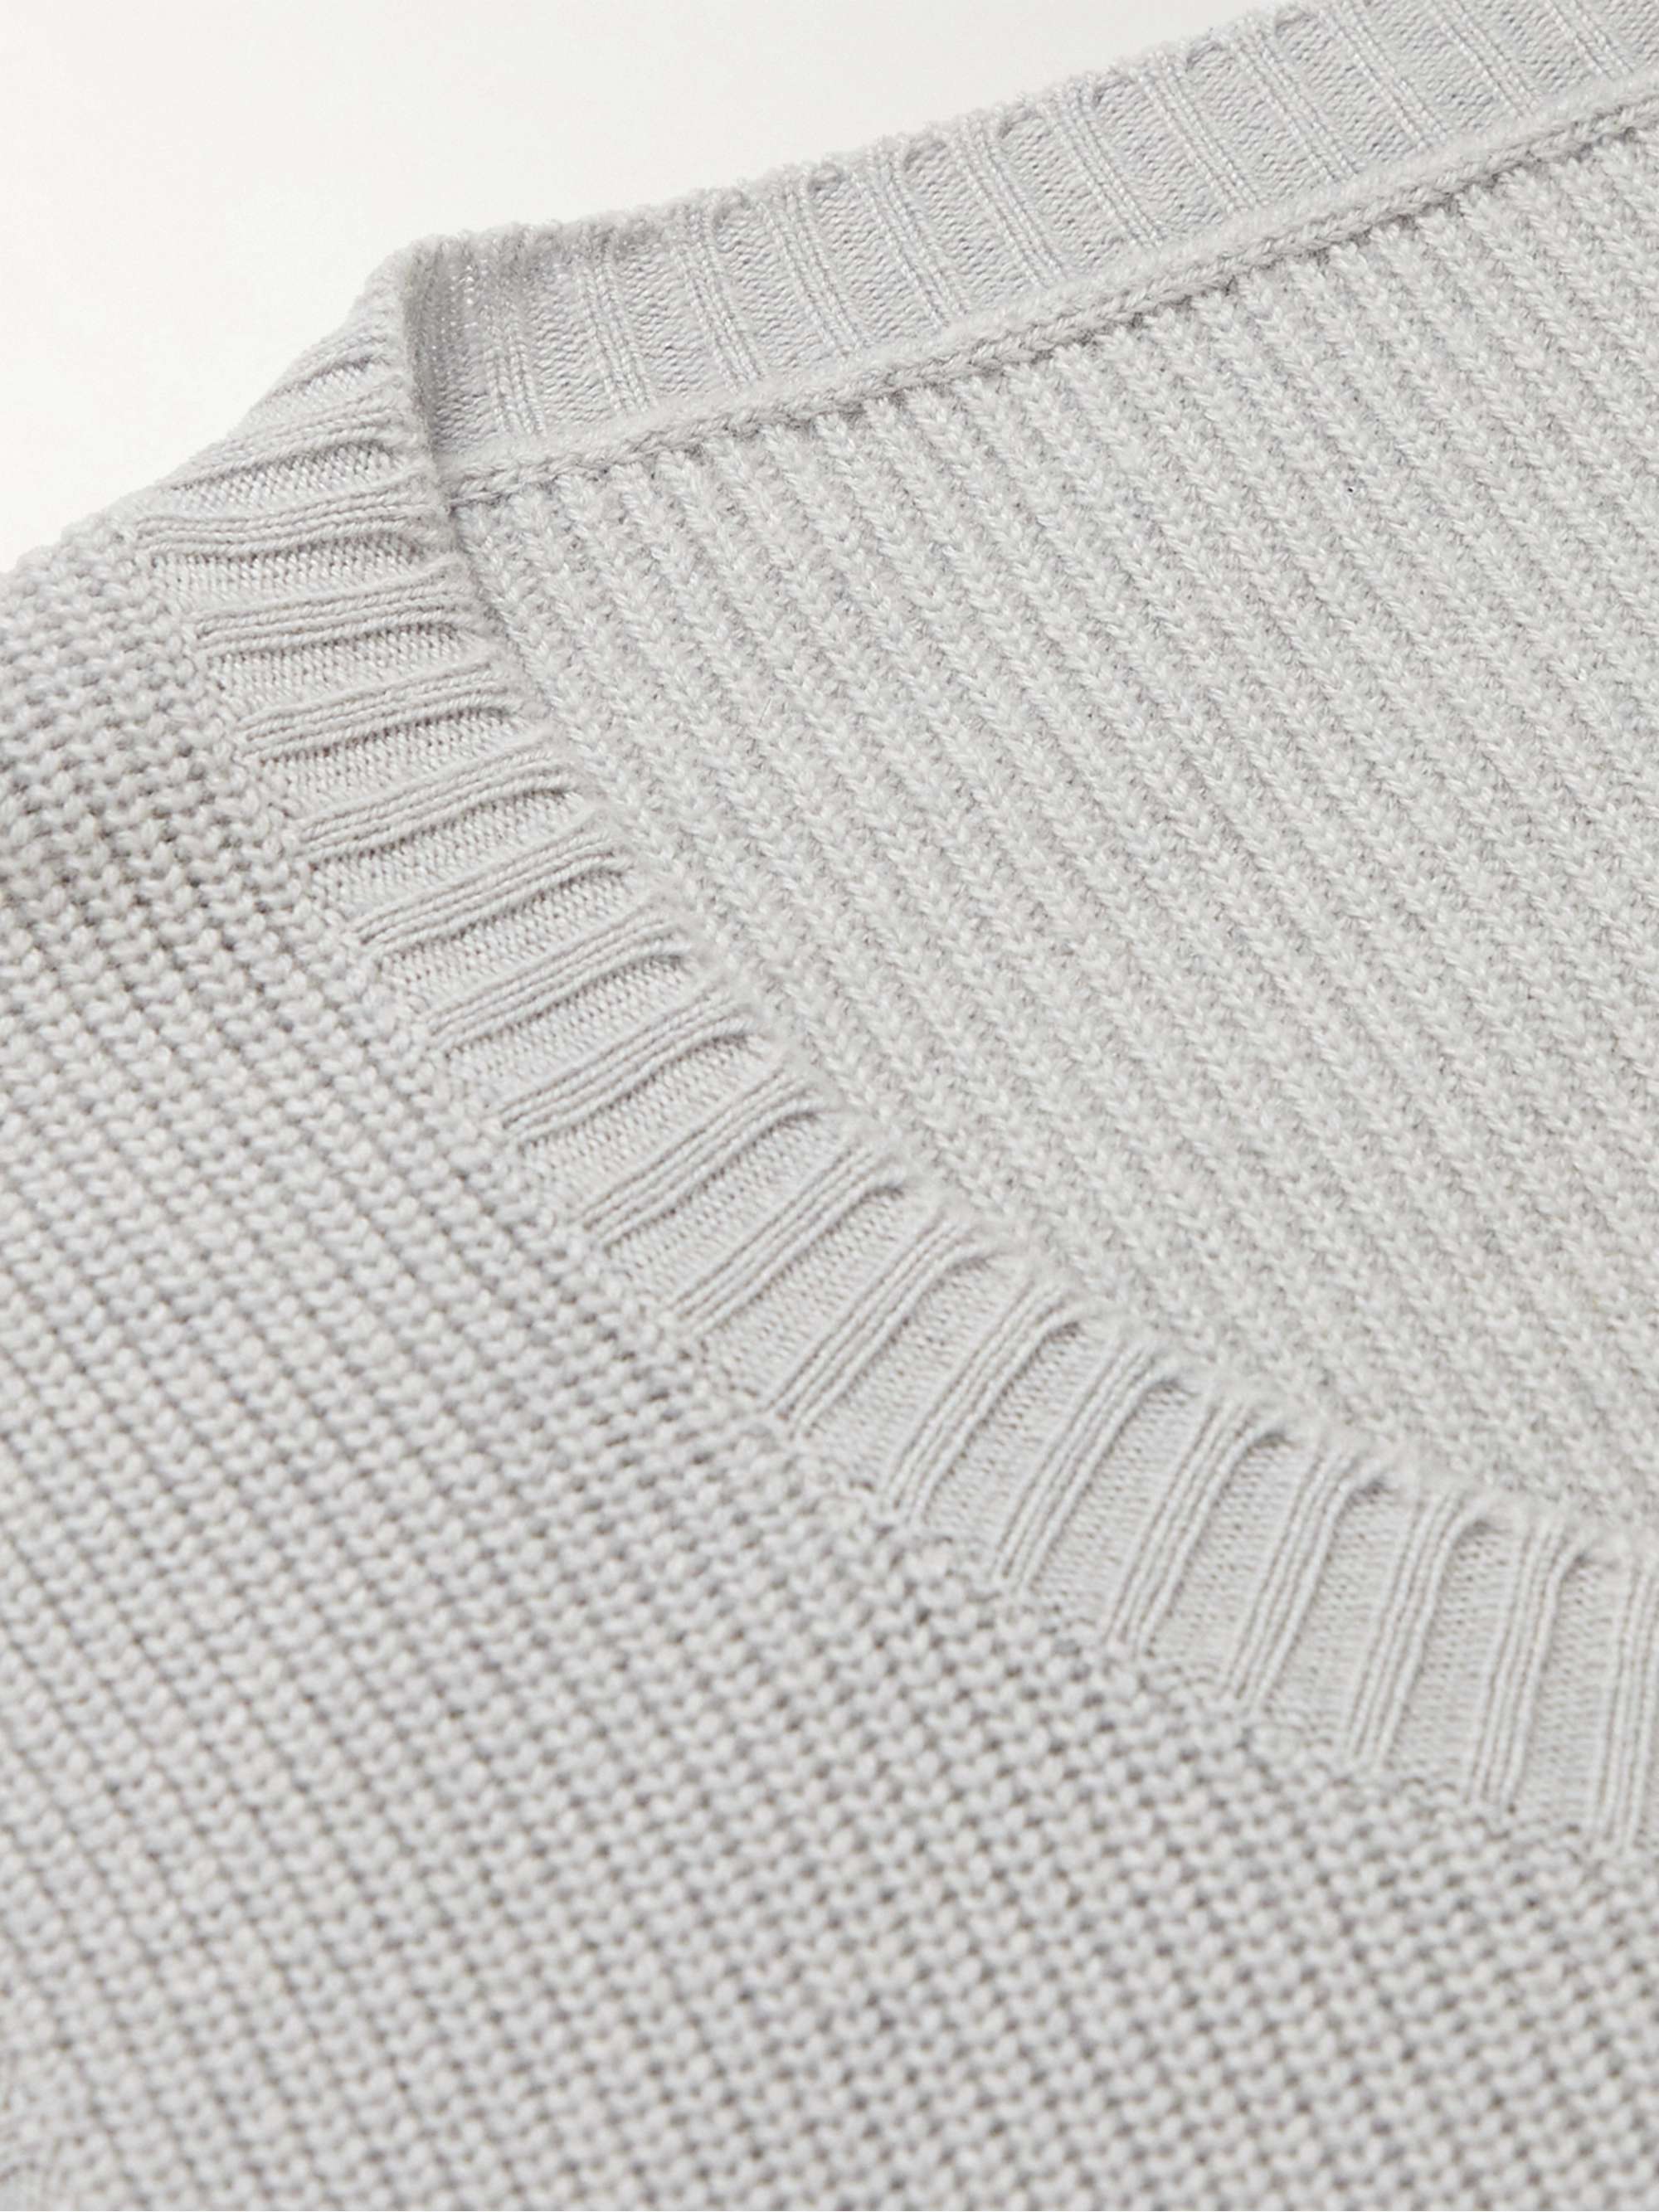 STÒFFA Ribbed Cashmere Sweater Vest